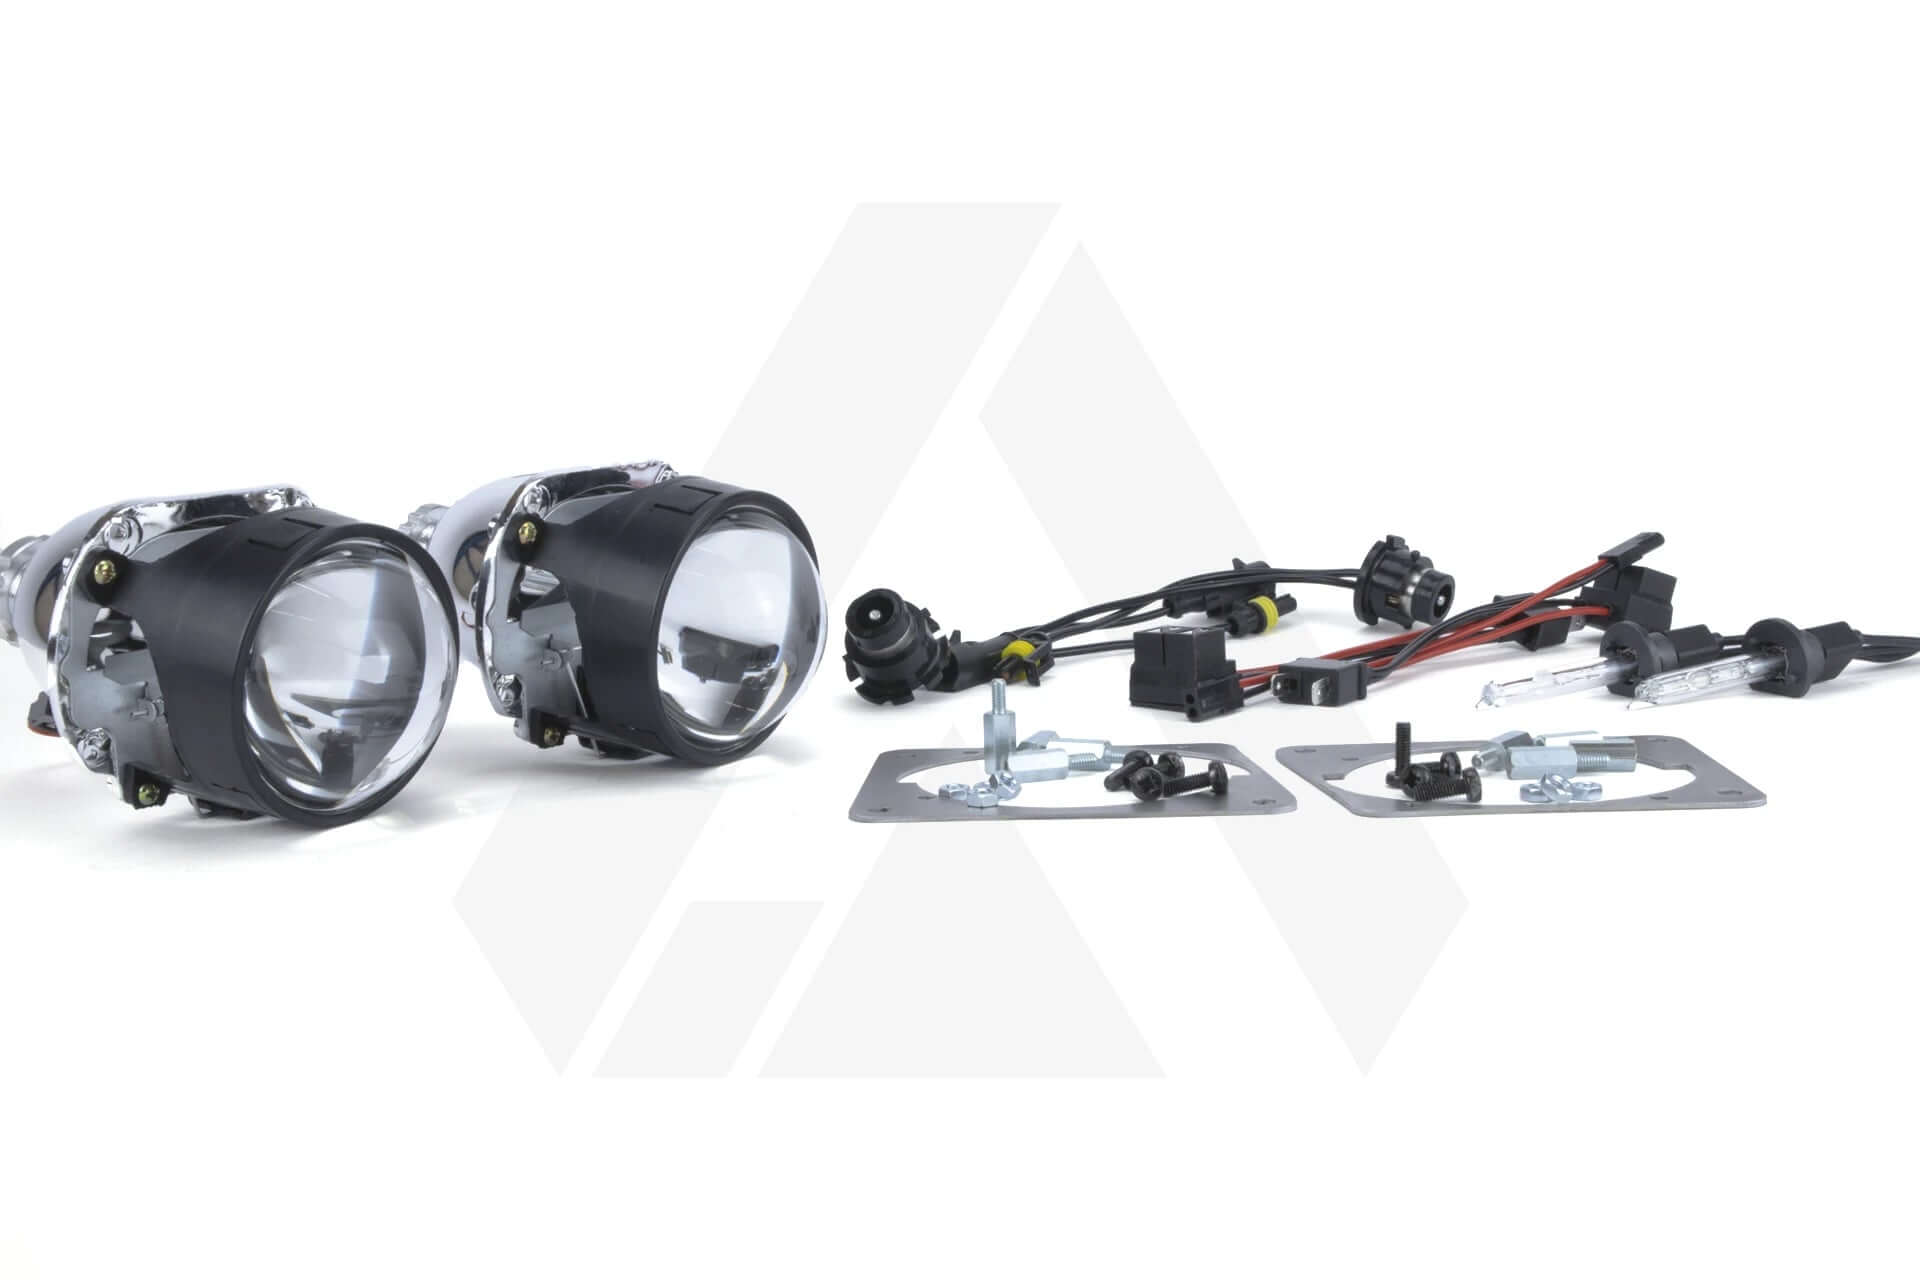 Fiat Bravo 07-14 bi-xenon headlight repair & upgrade kit for xenon HID headlights